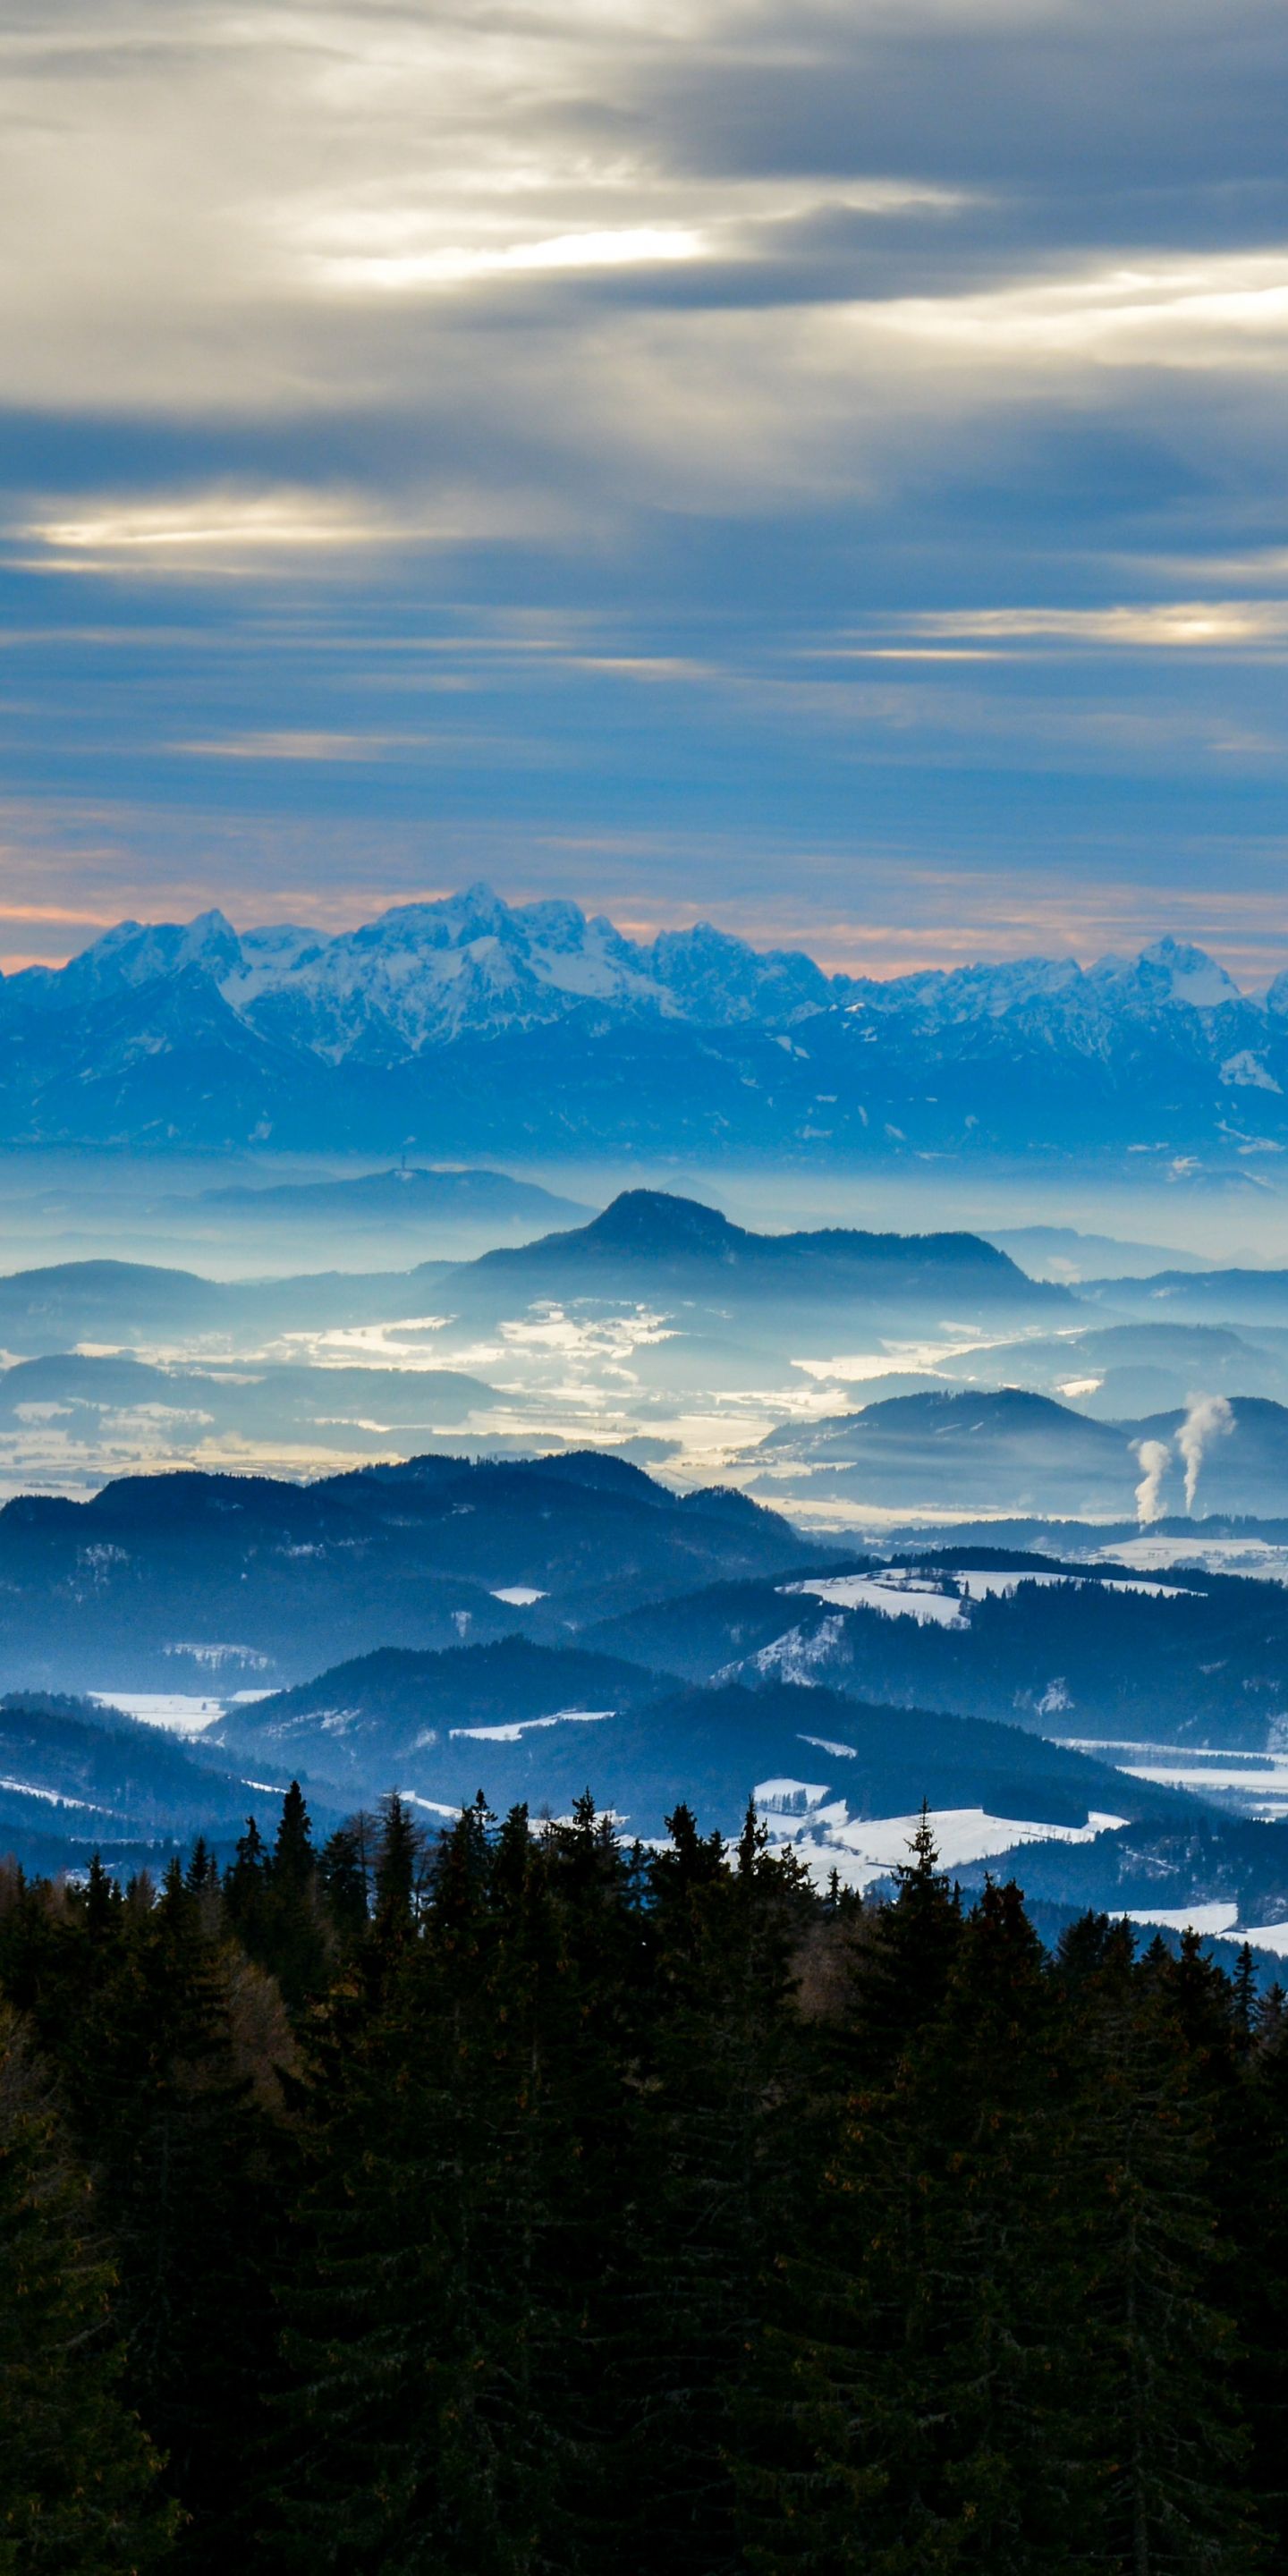 Download 1440x2880 wallpaper mountains, horizon, misty sunrise, austria, lg v lg g 1440x2880 HD image, background, 563